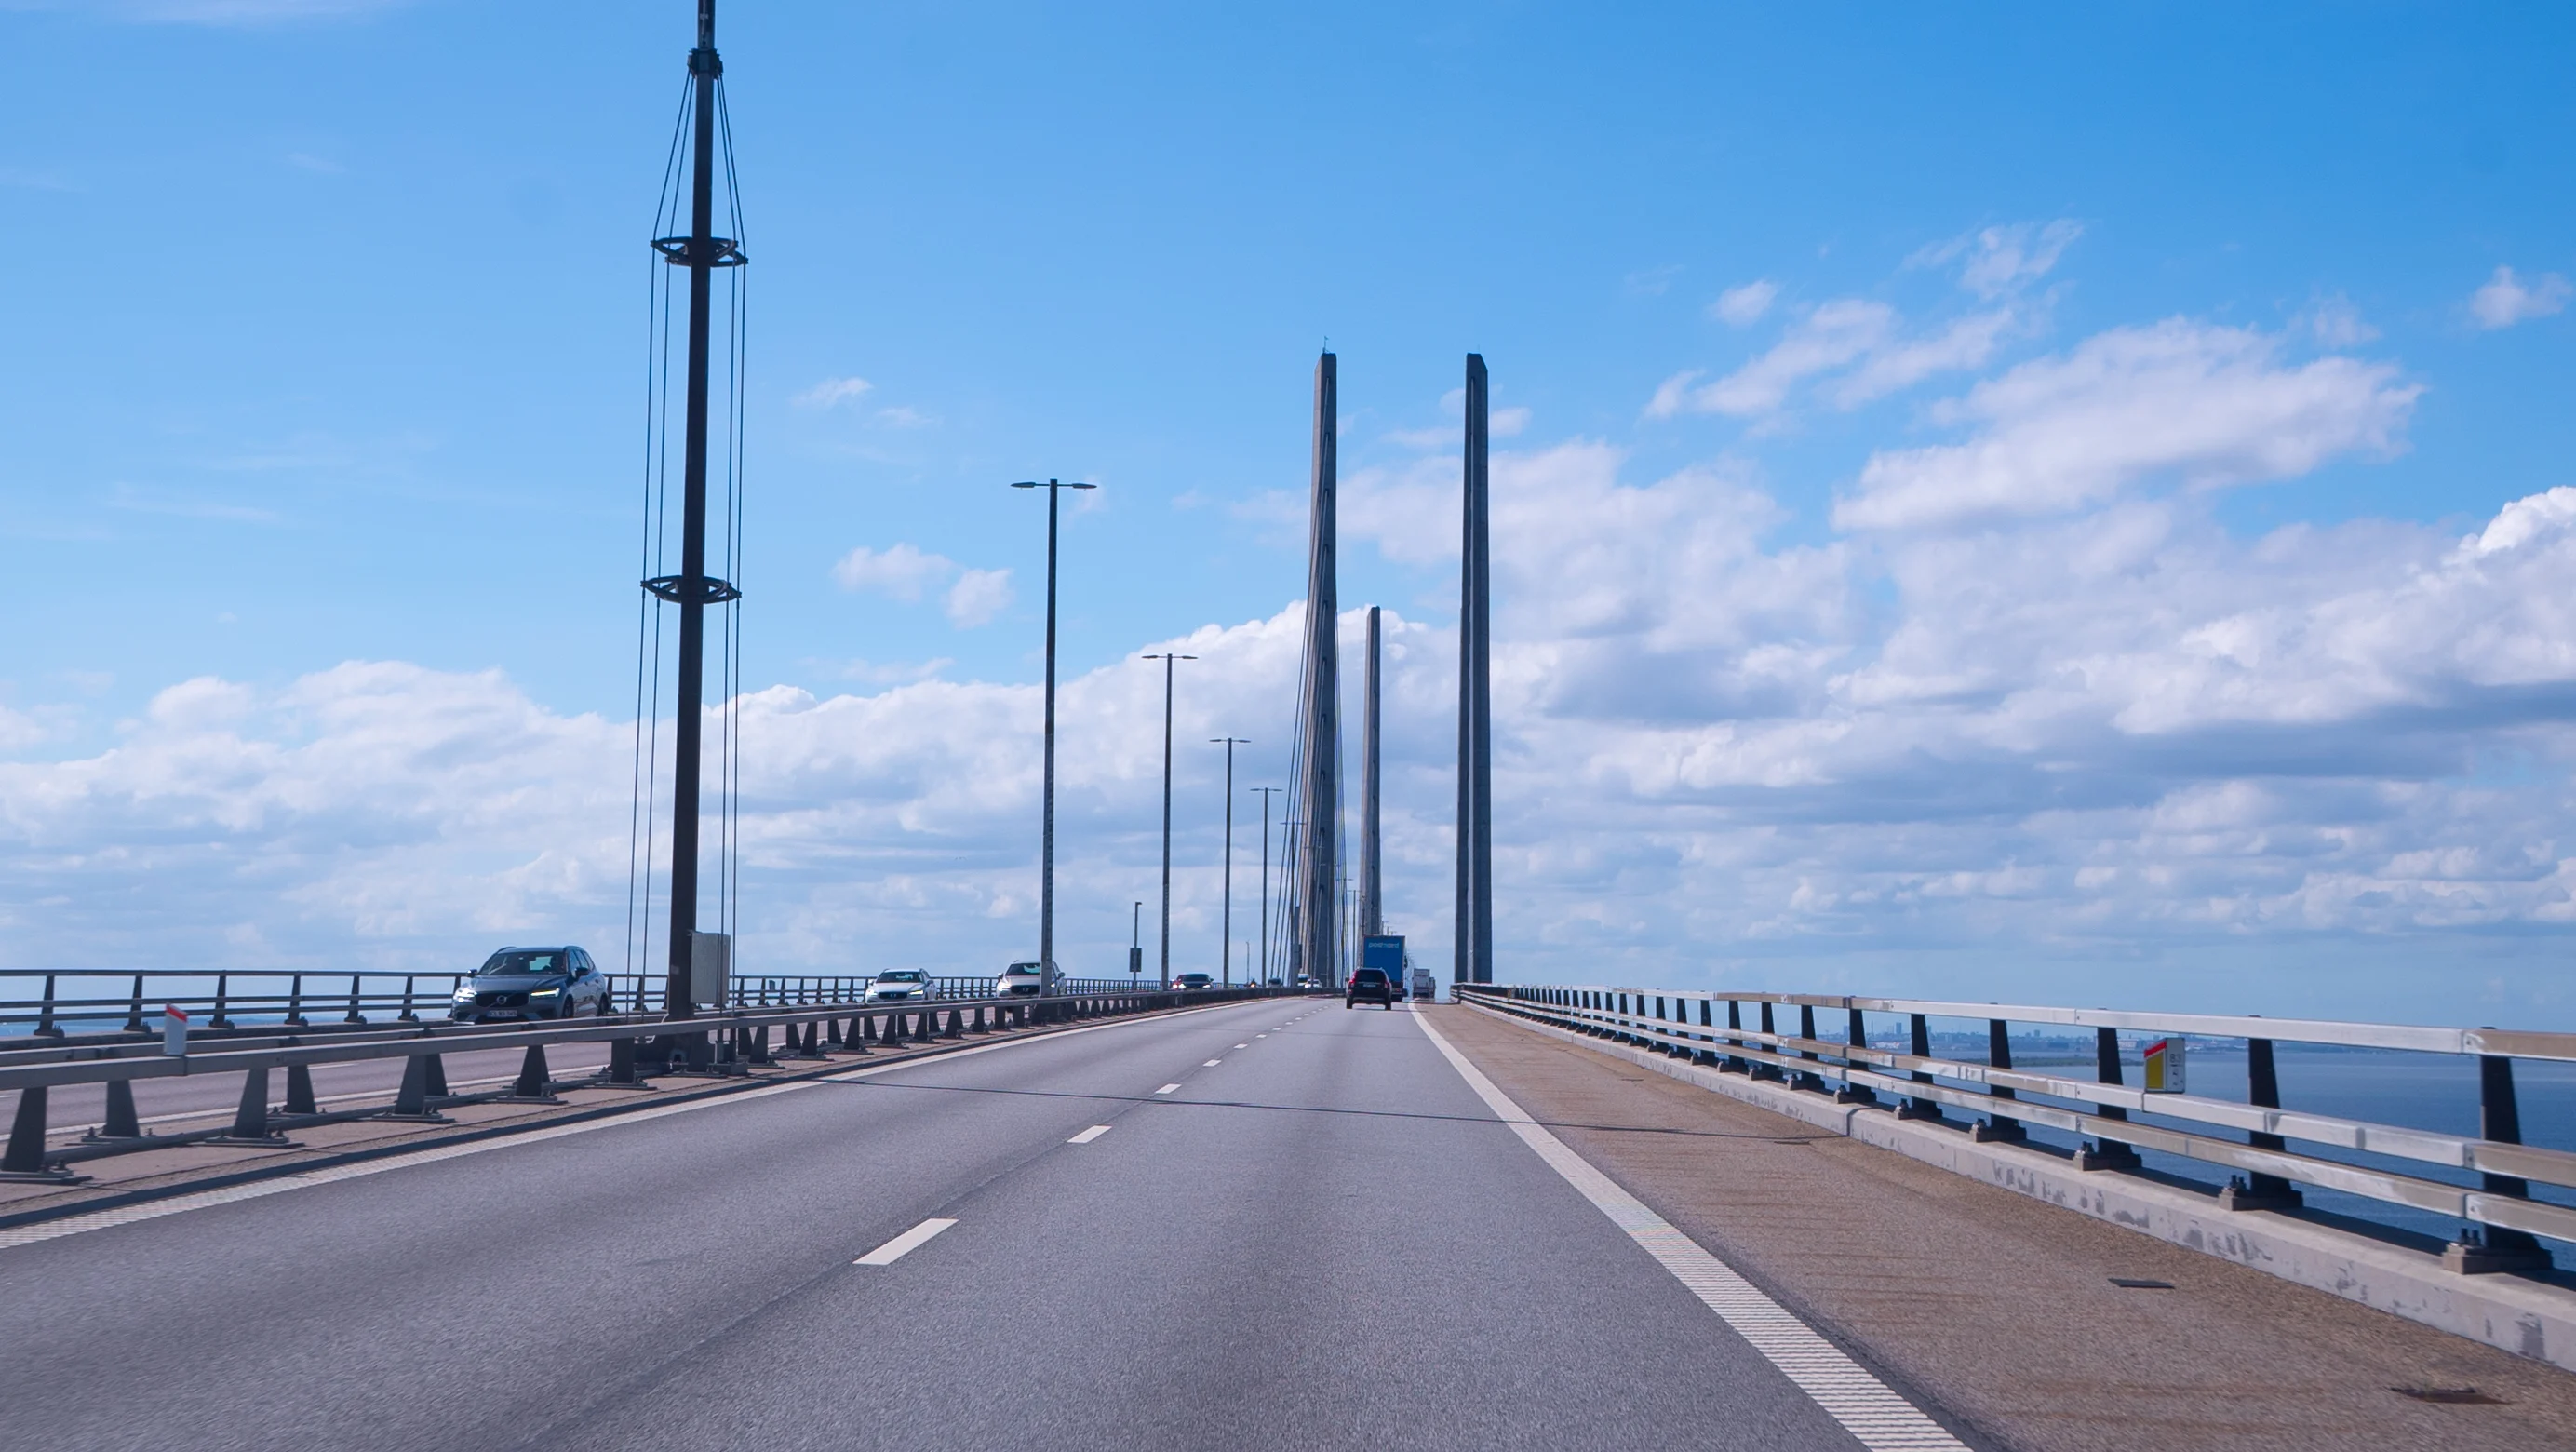 Car driving on the Øresund bridge towards the pylons.